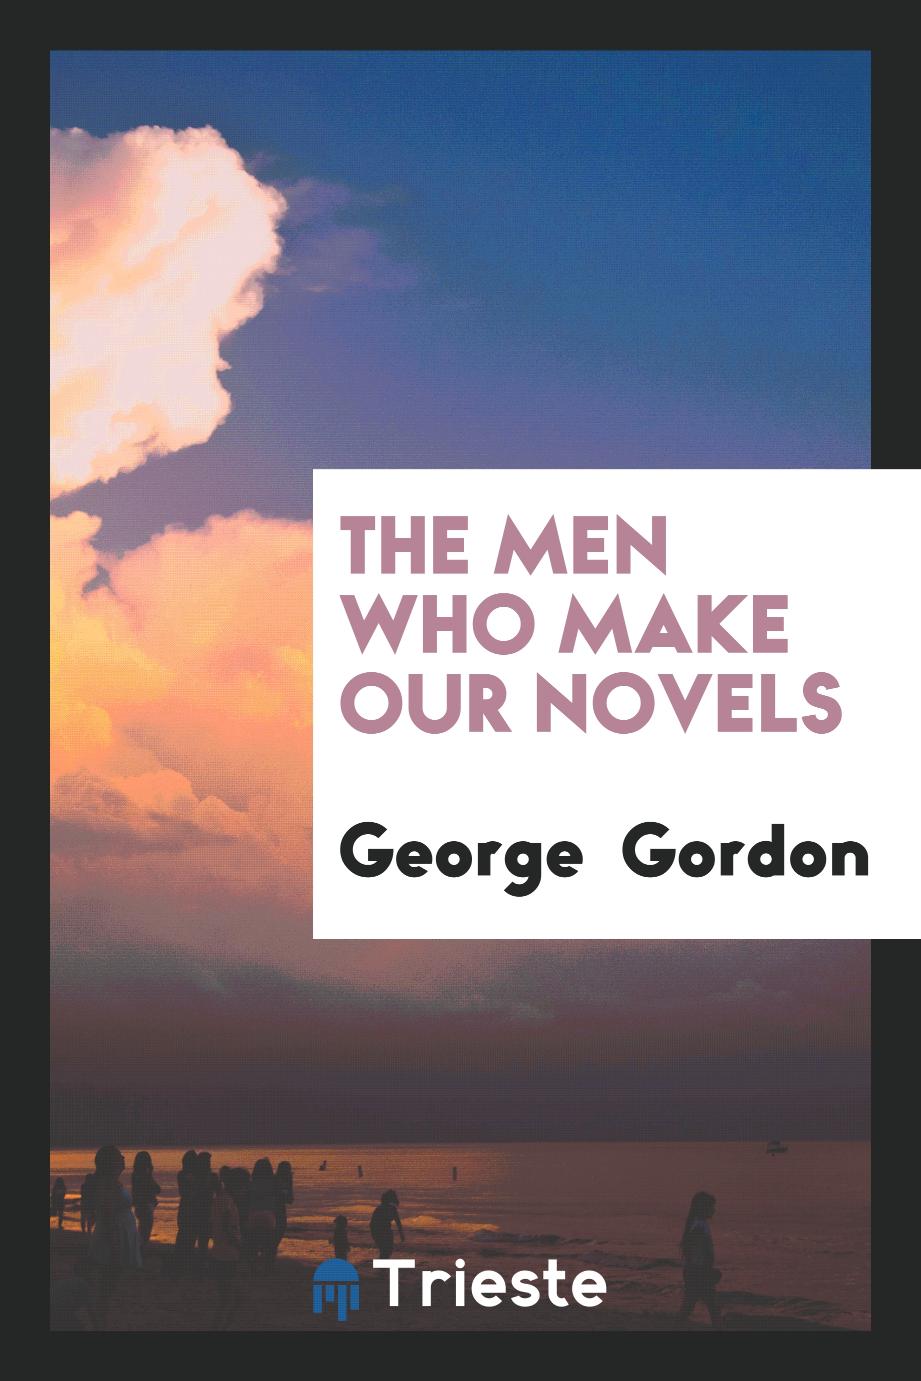 The men who make our novels